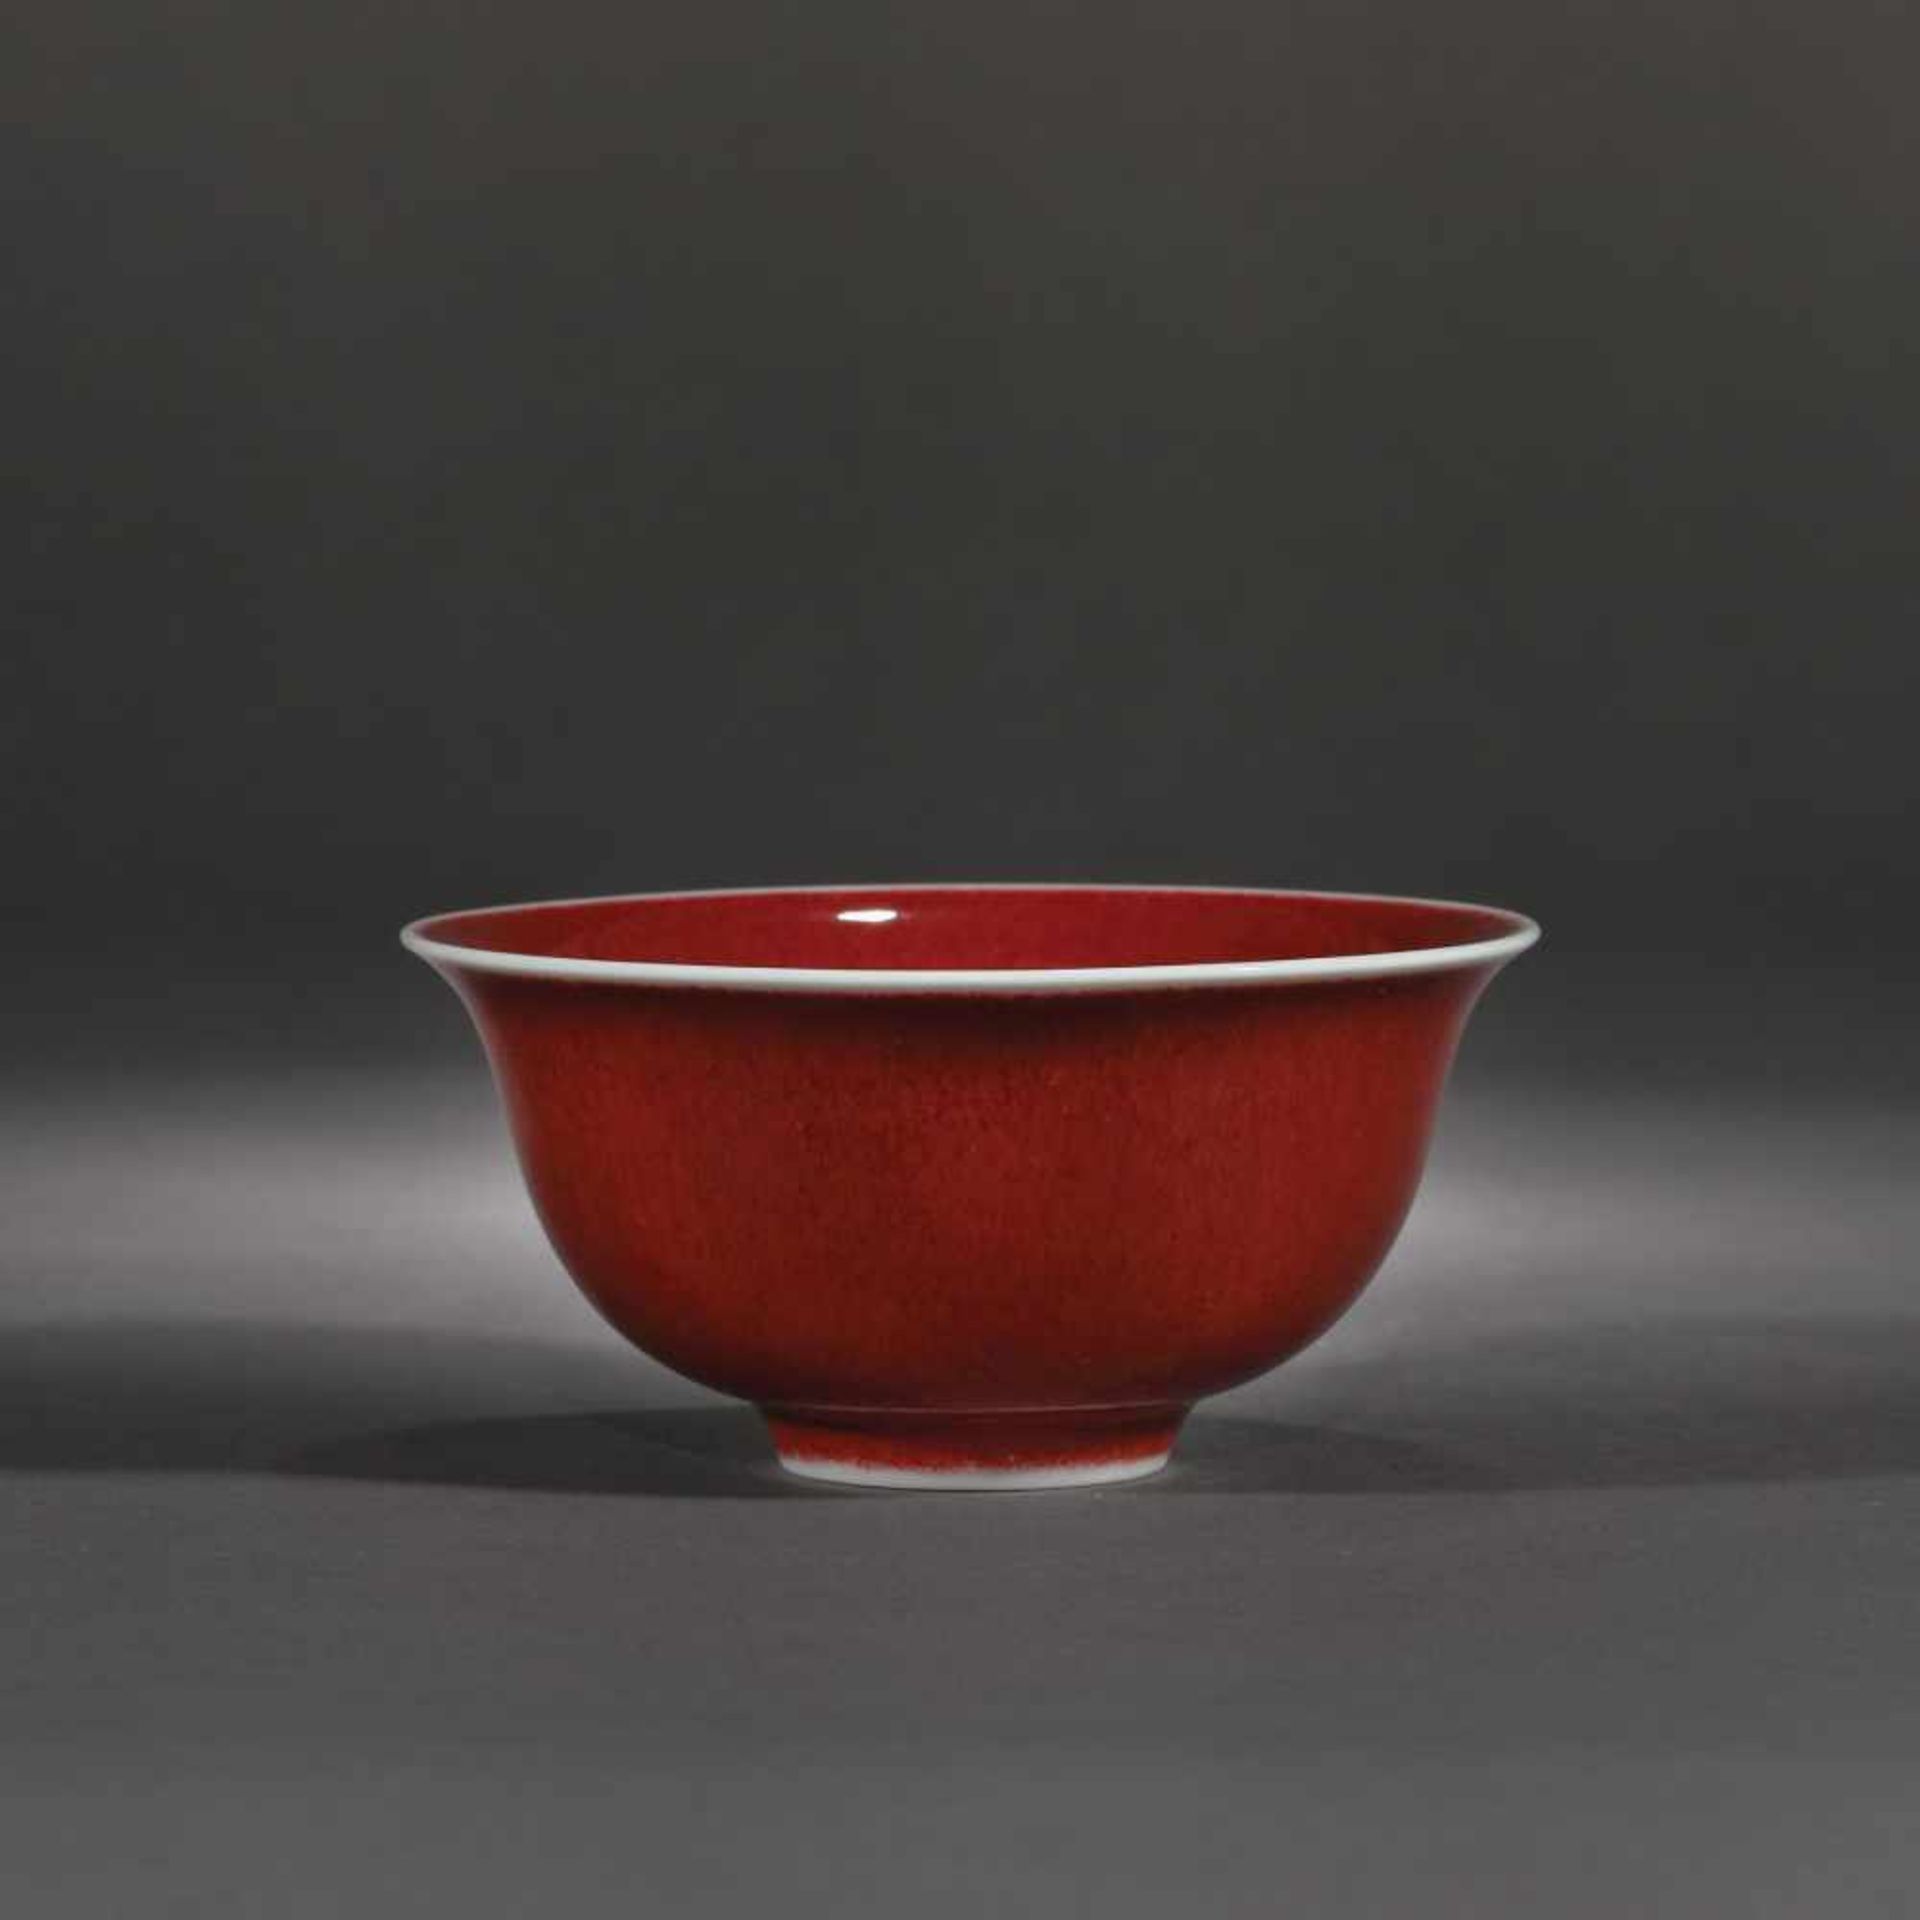 Langyao porcelain bowl with copper-red glaze, Qianlong mark, Qianlong dynasty, China, ca. 1736-